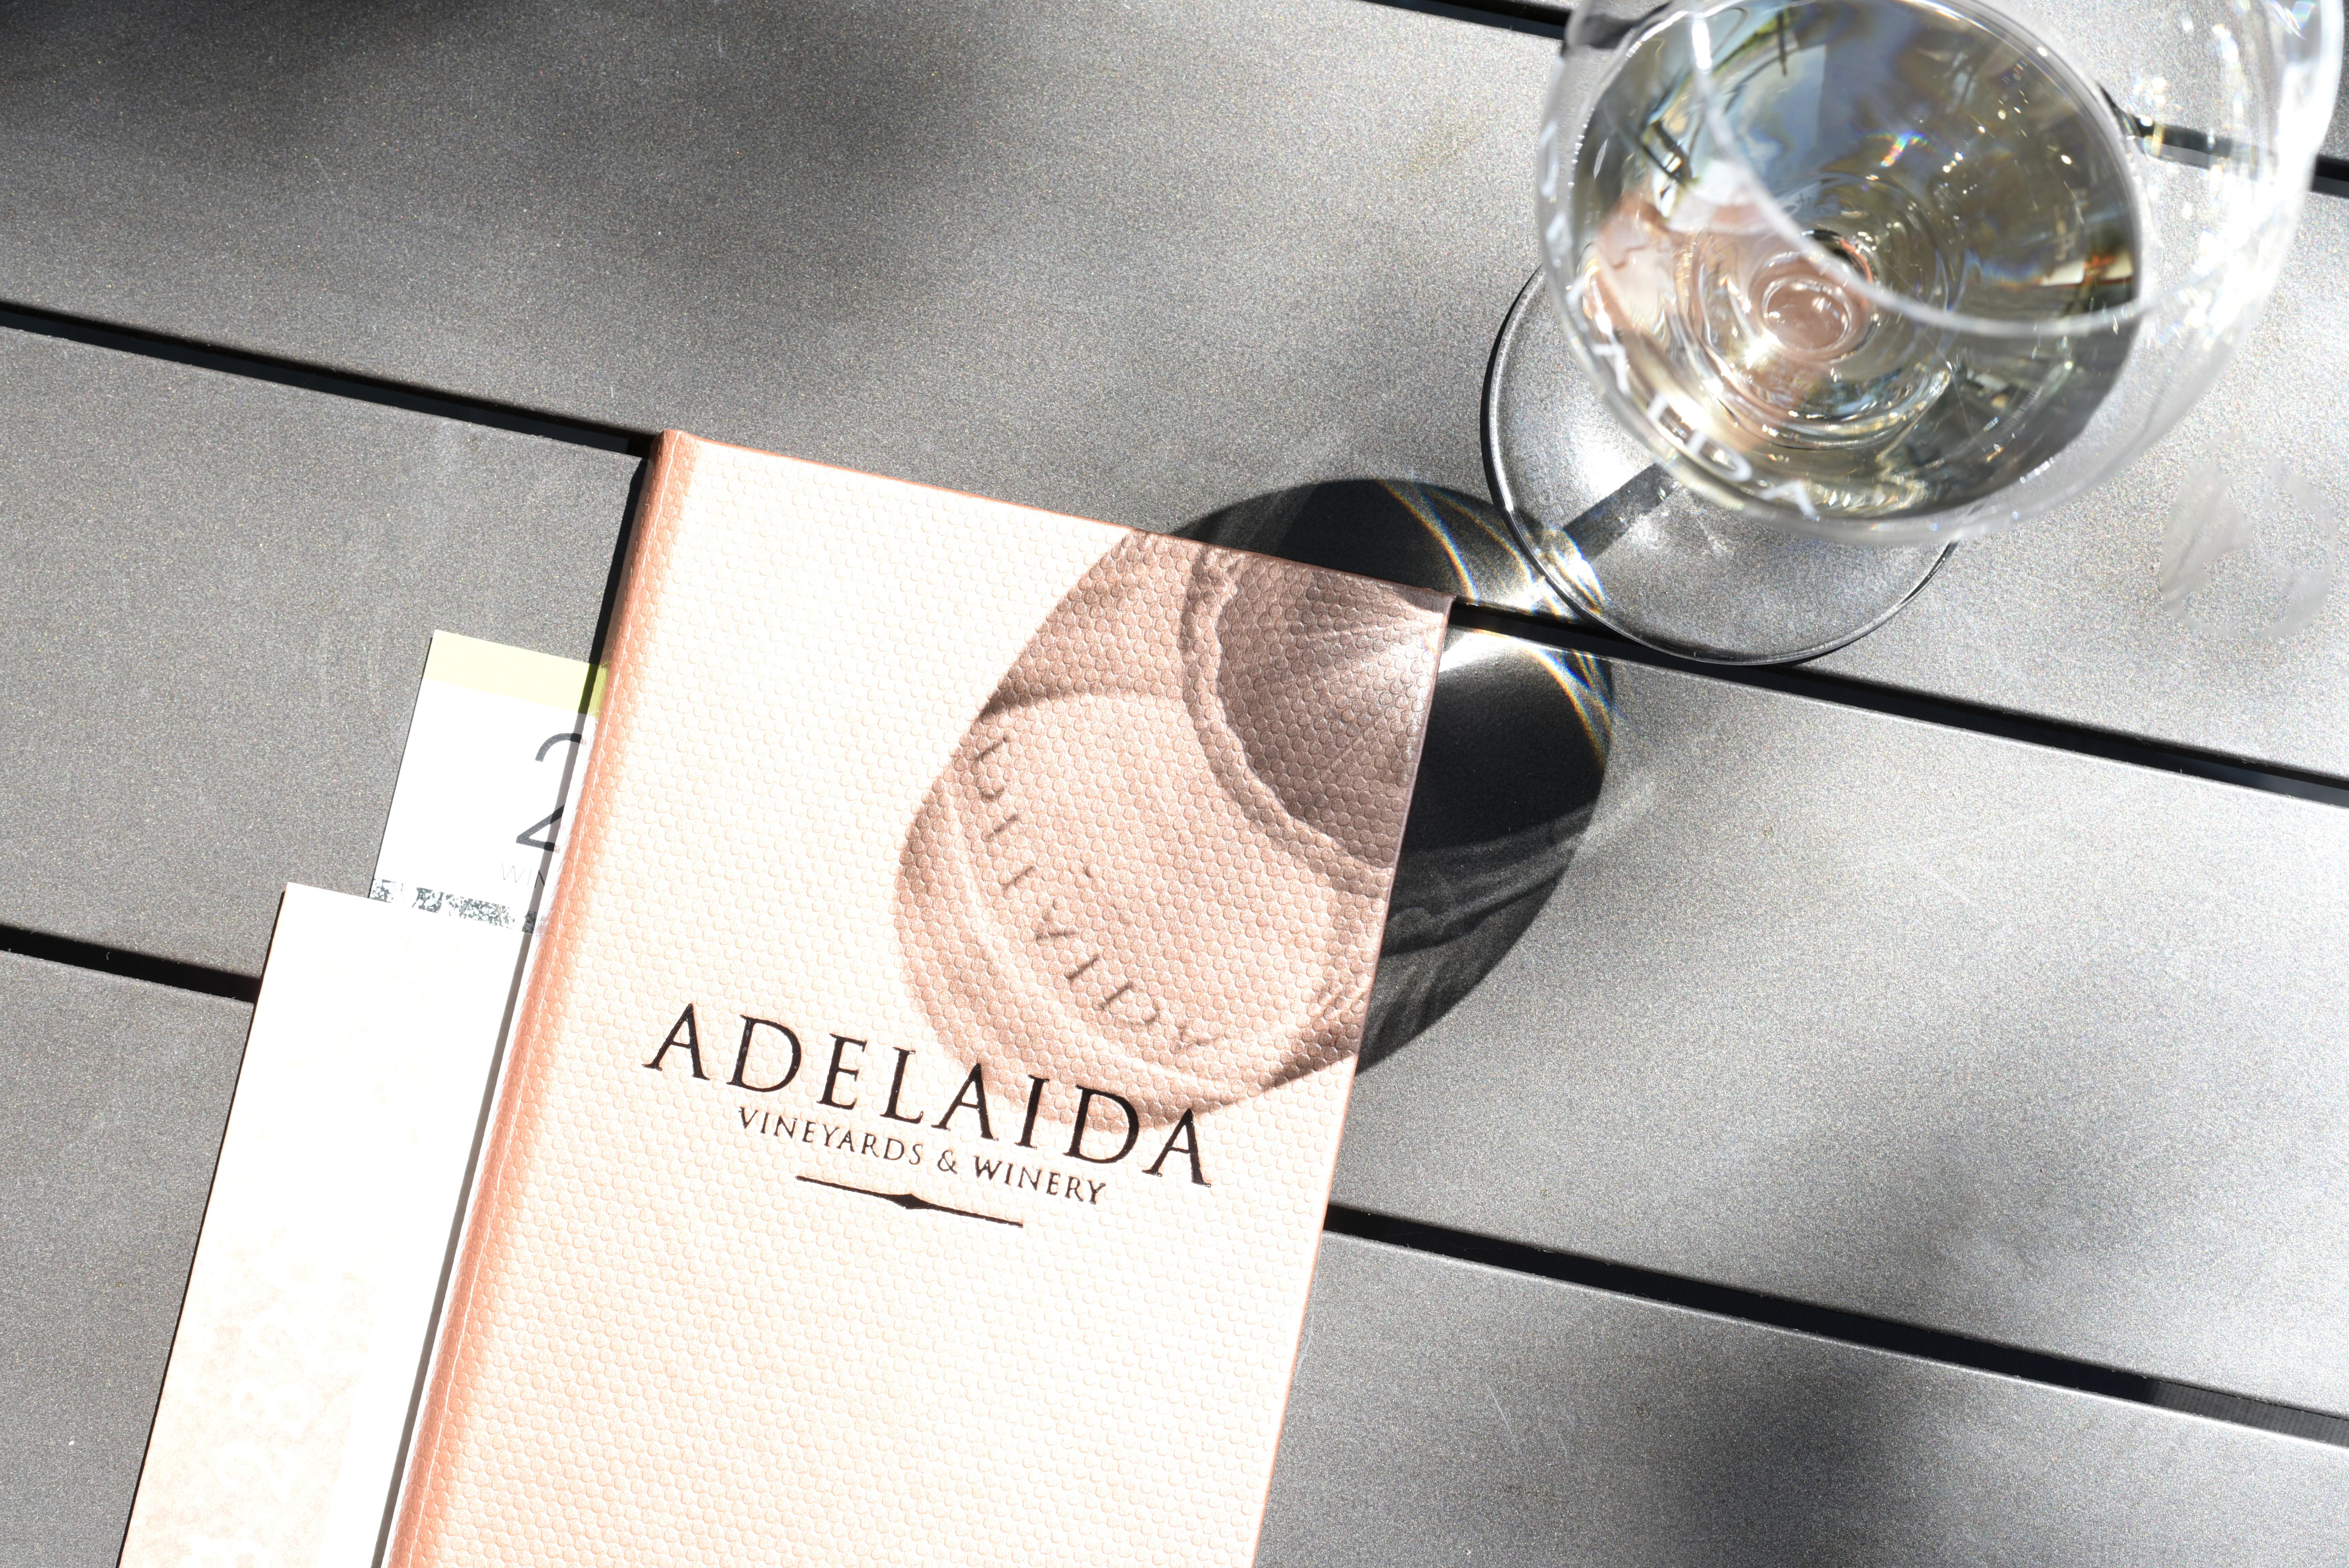 Adelaida Vineyards & Winery